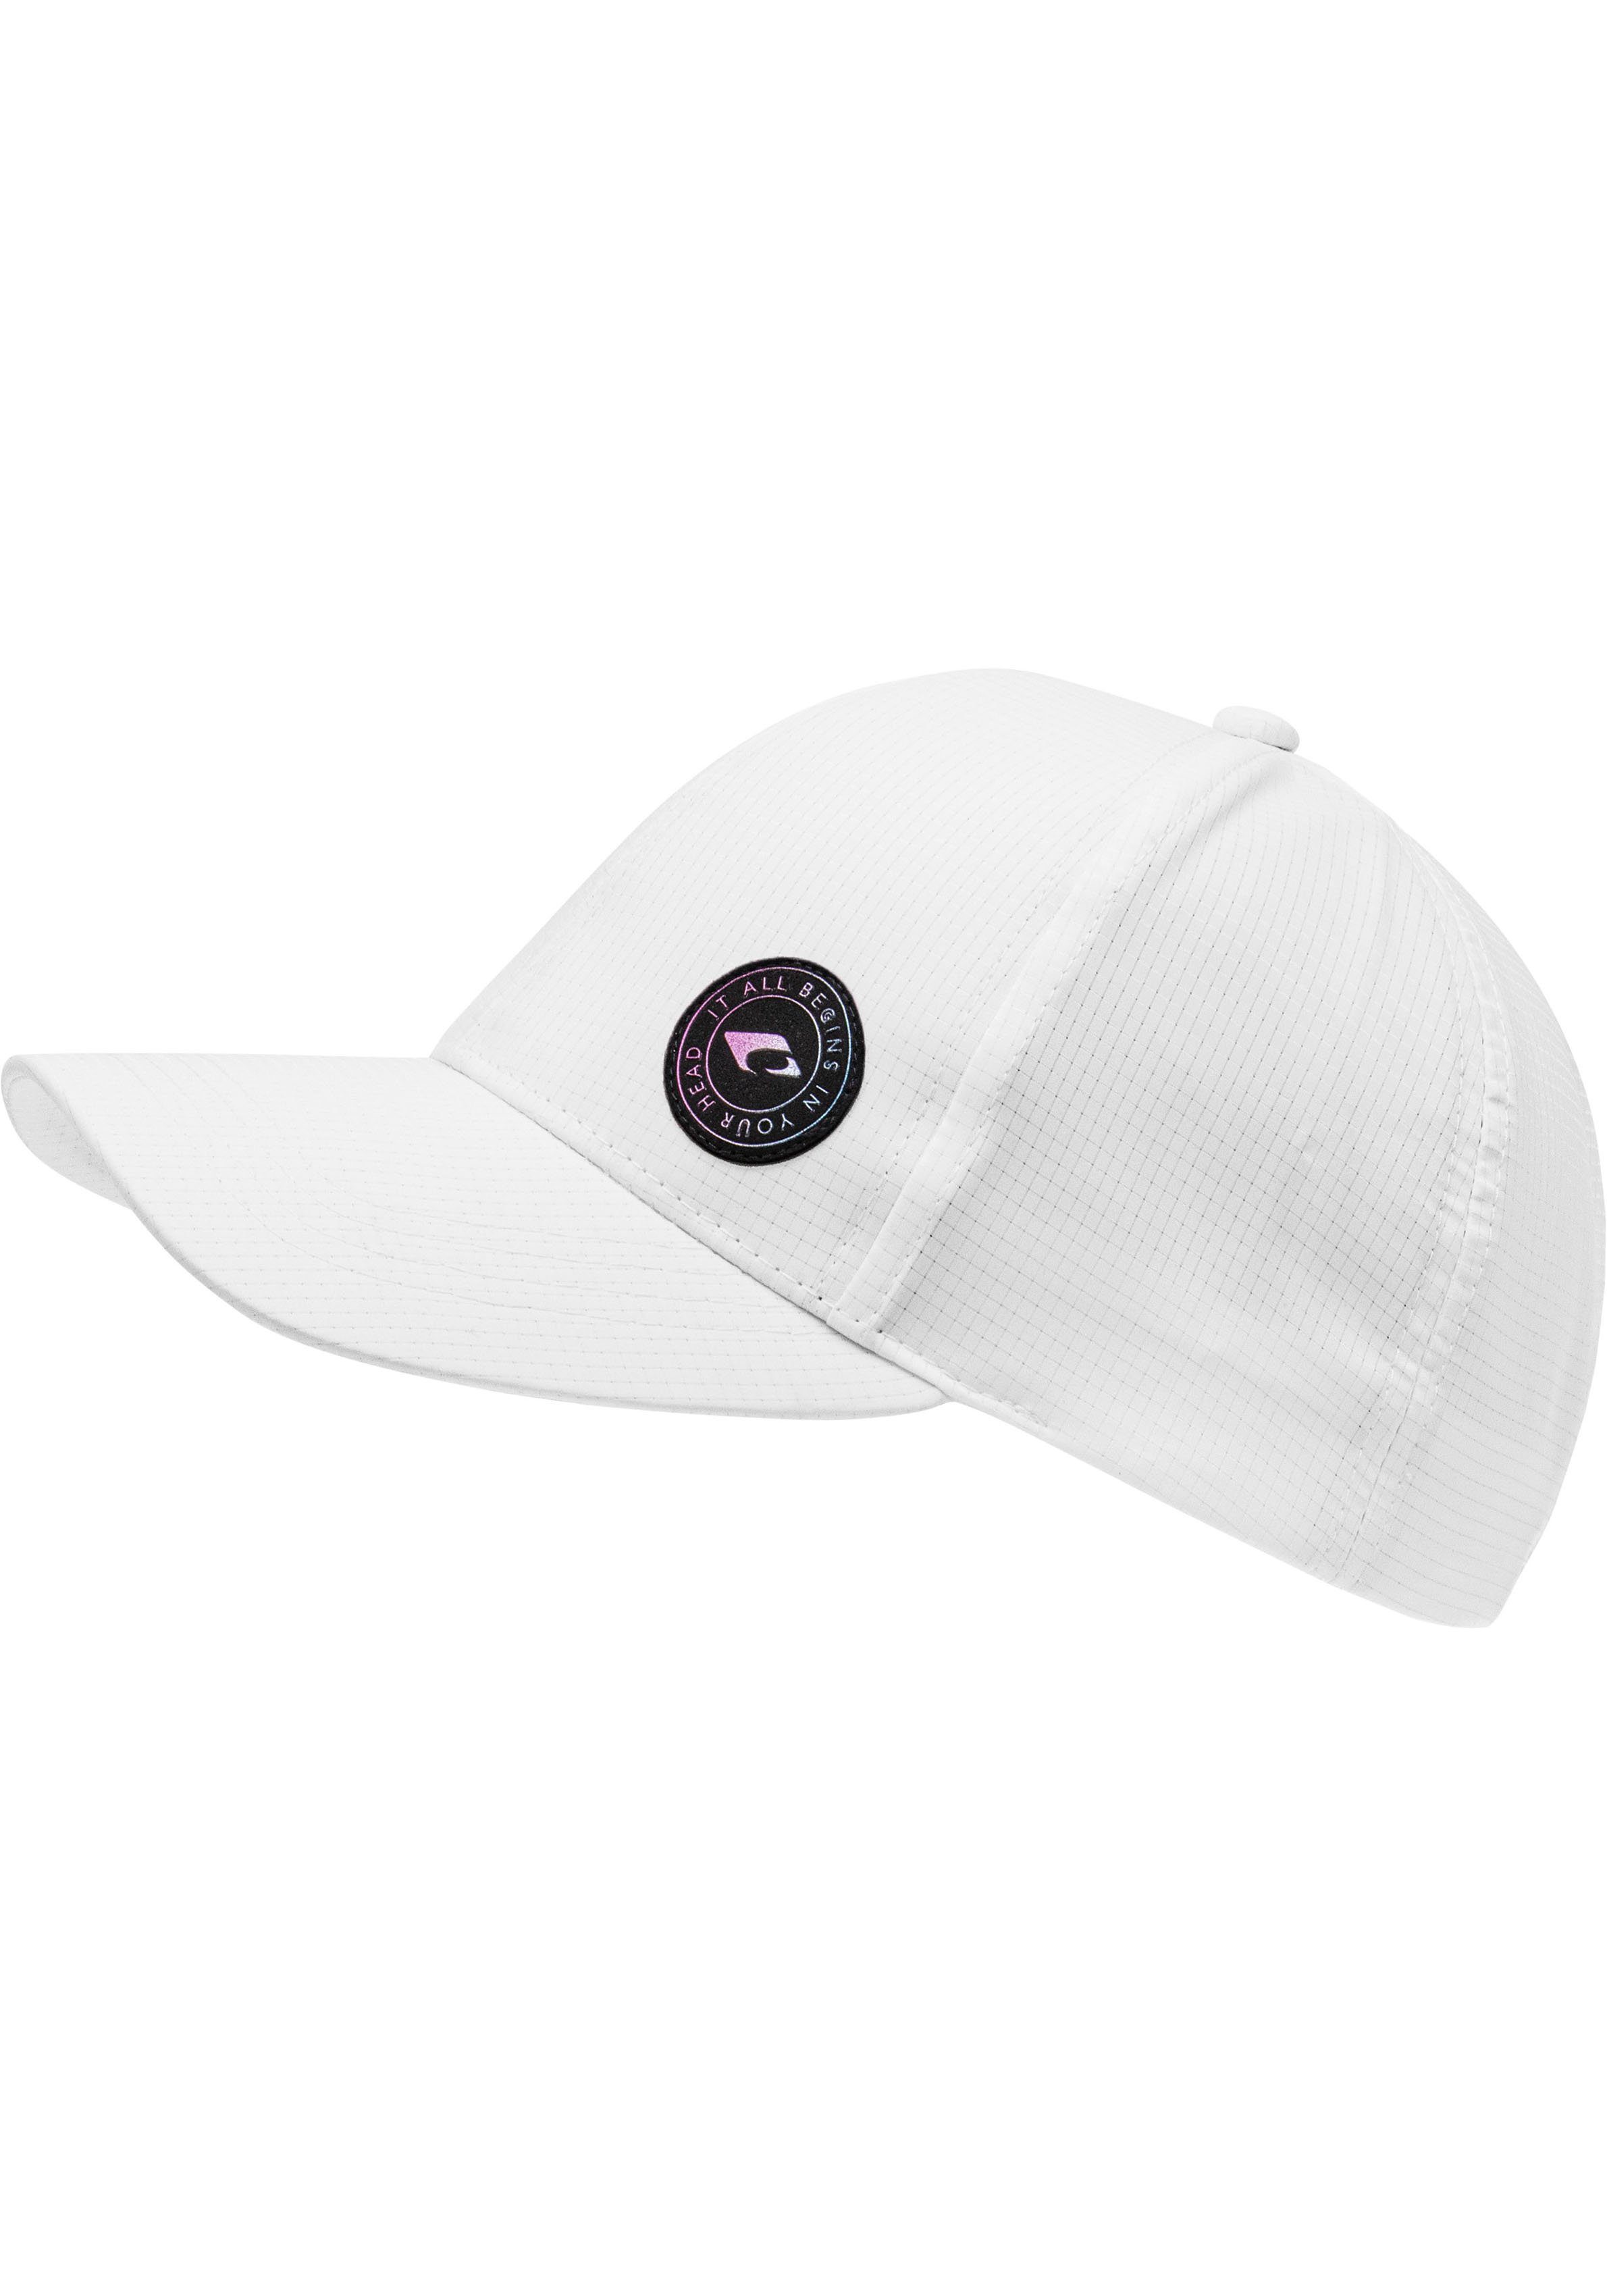 verstellbar Langley Cap Hat, Baseball Individuell chillouts